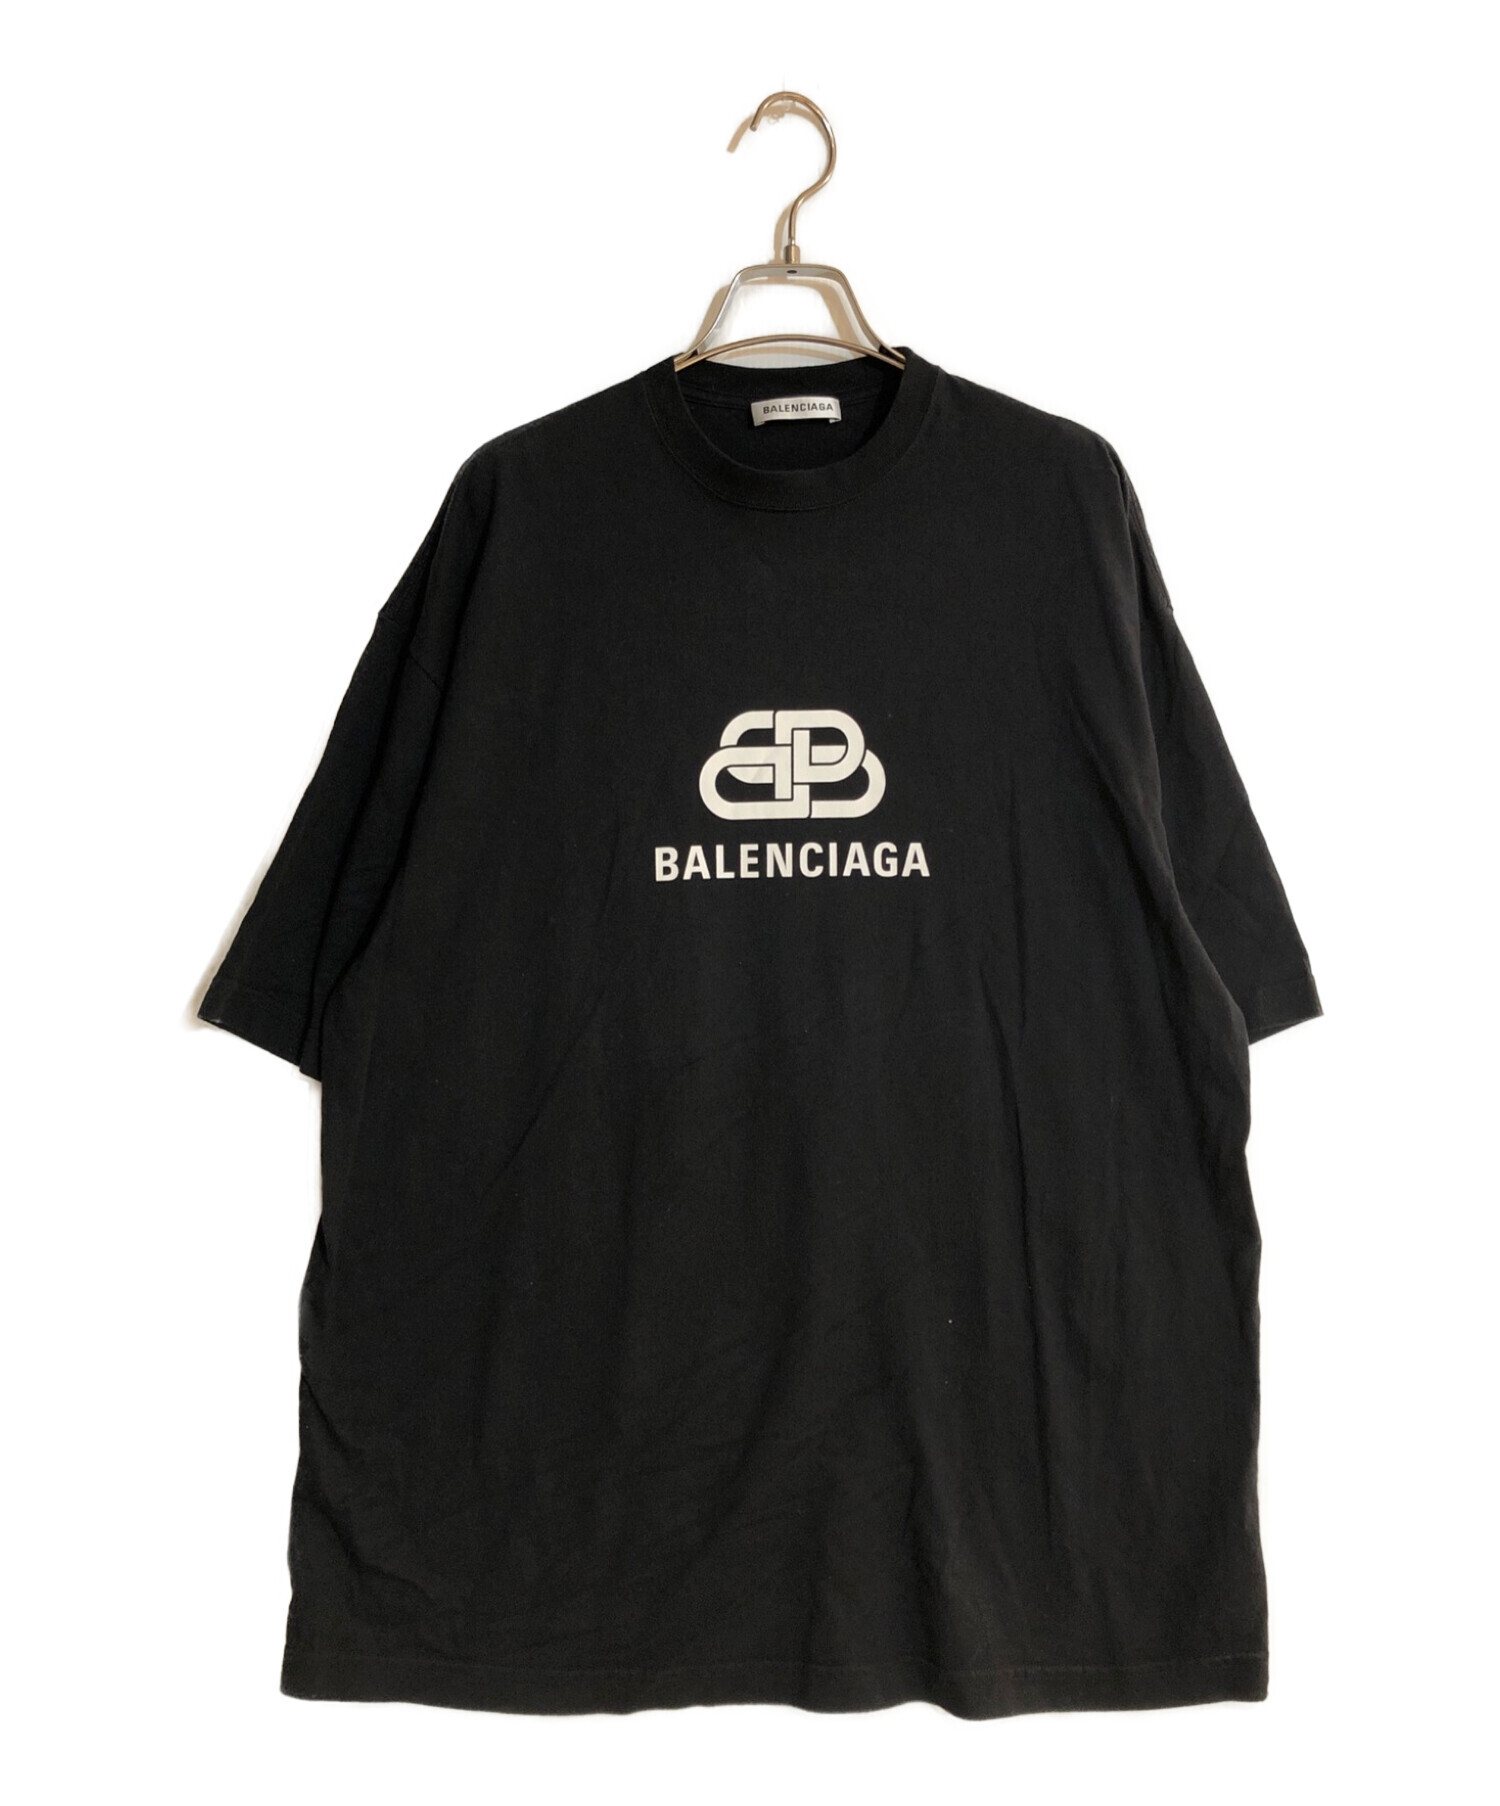 BALENCIAGA (バレンシアガ) オーバーサイズ BBロゴ Tシャツ ブラック サイズ:XS